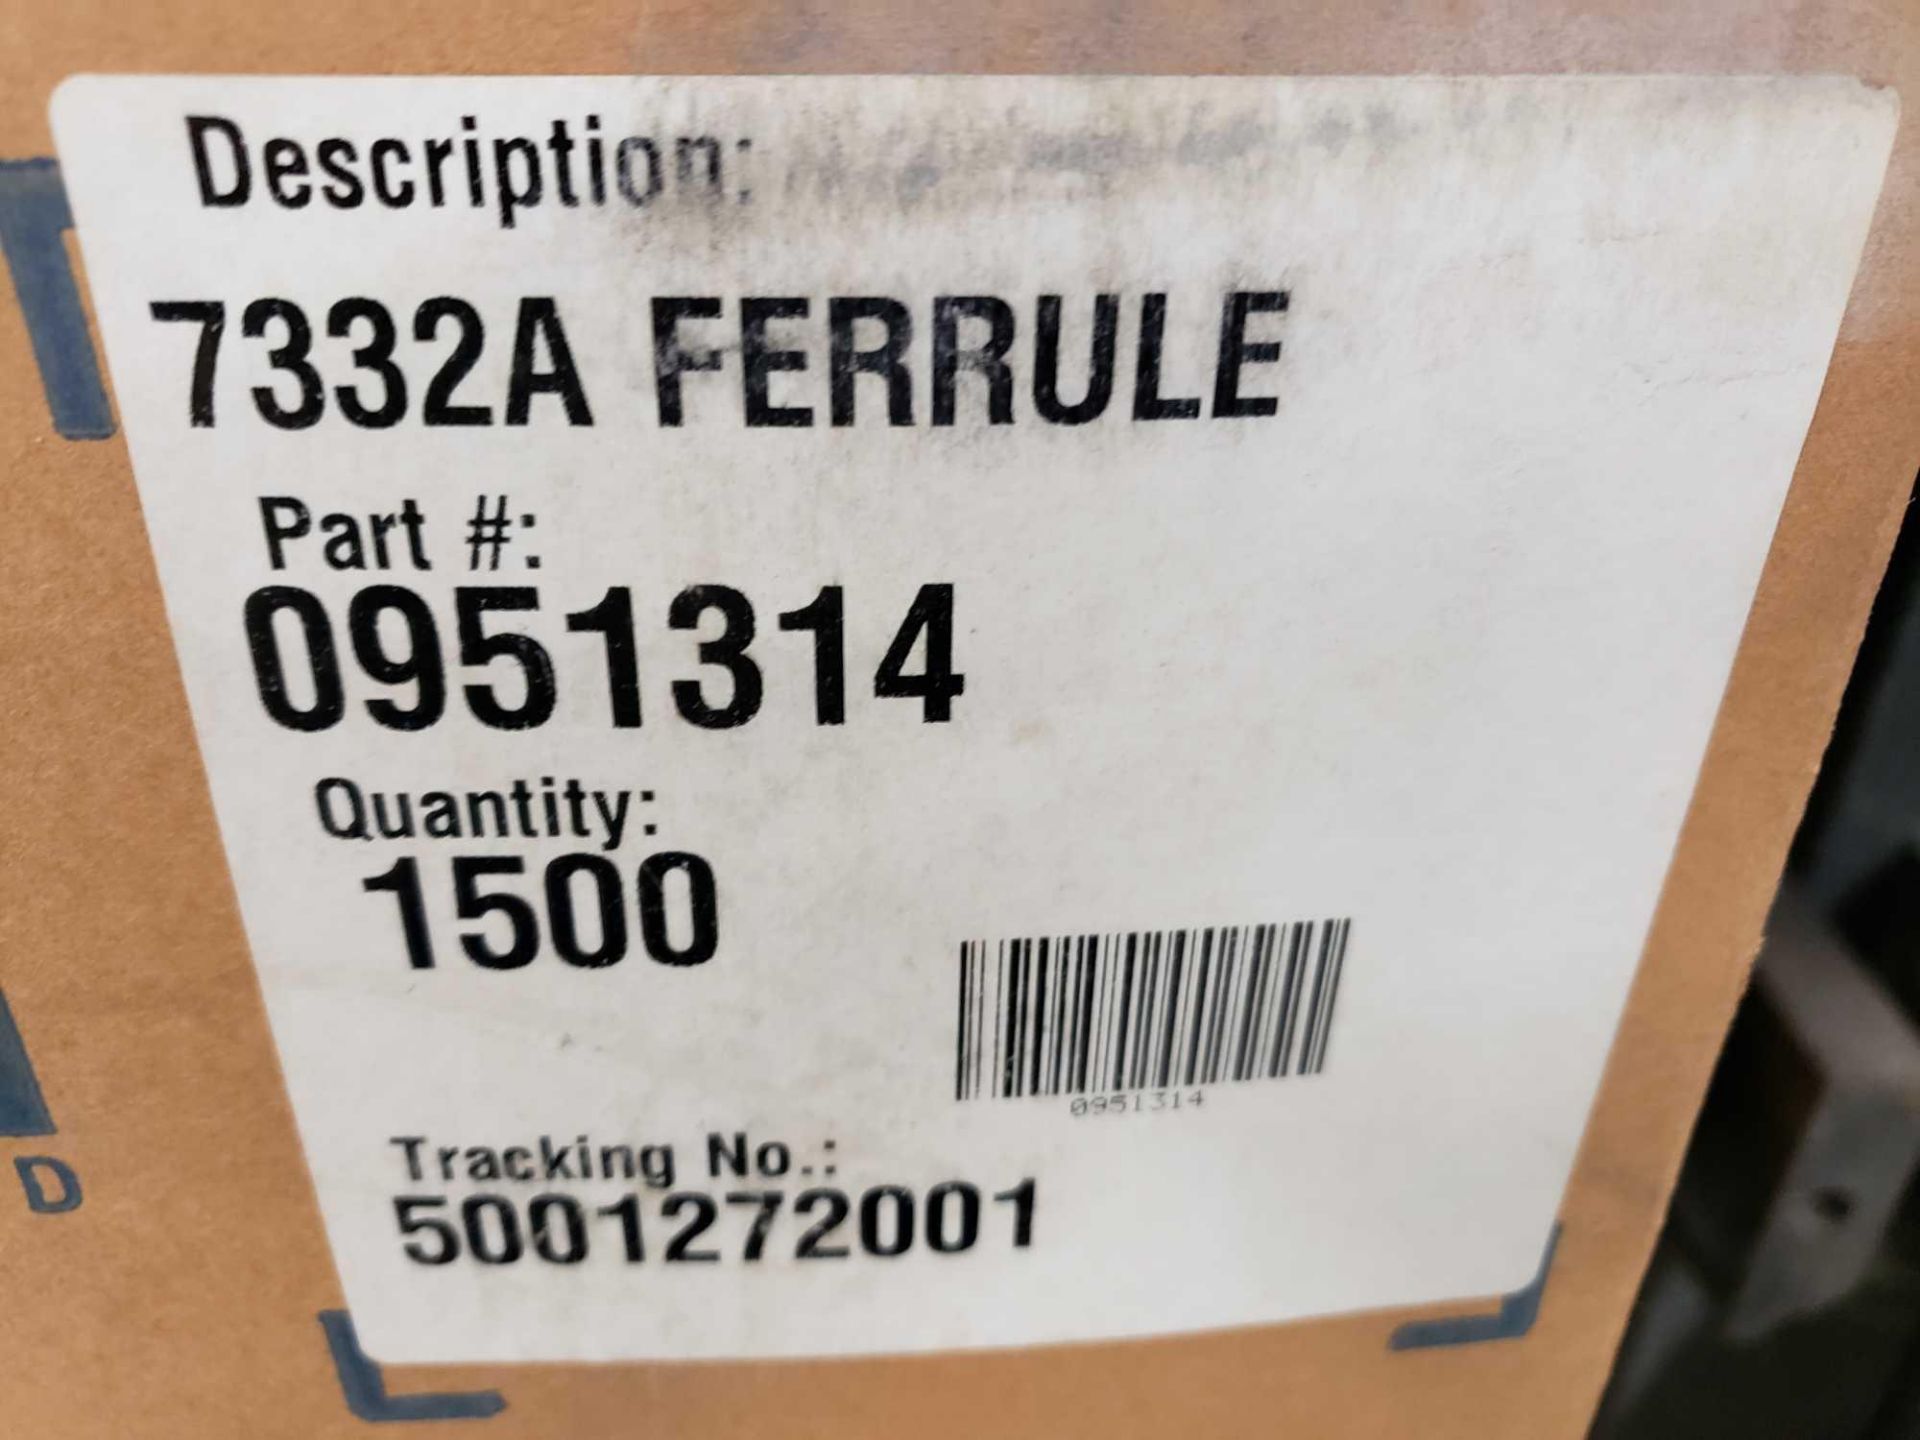 Qty 3000 - Truex ferrule model 7332A, part number 0951314. New in bulk box. - Image 2 of 3